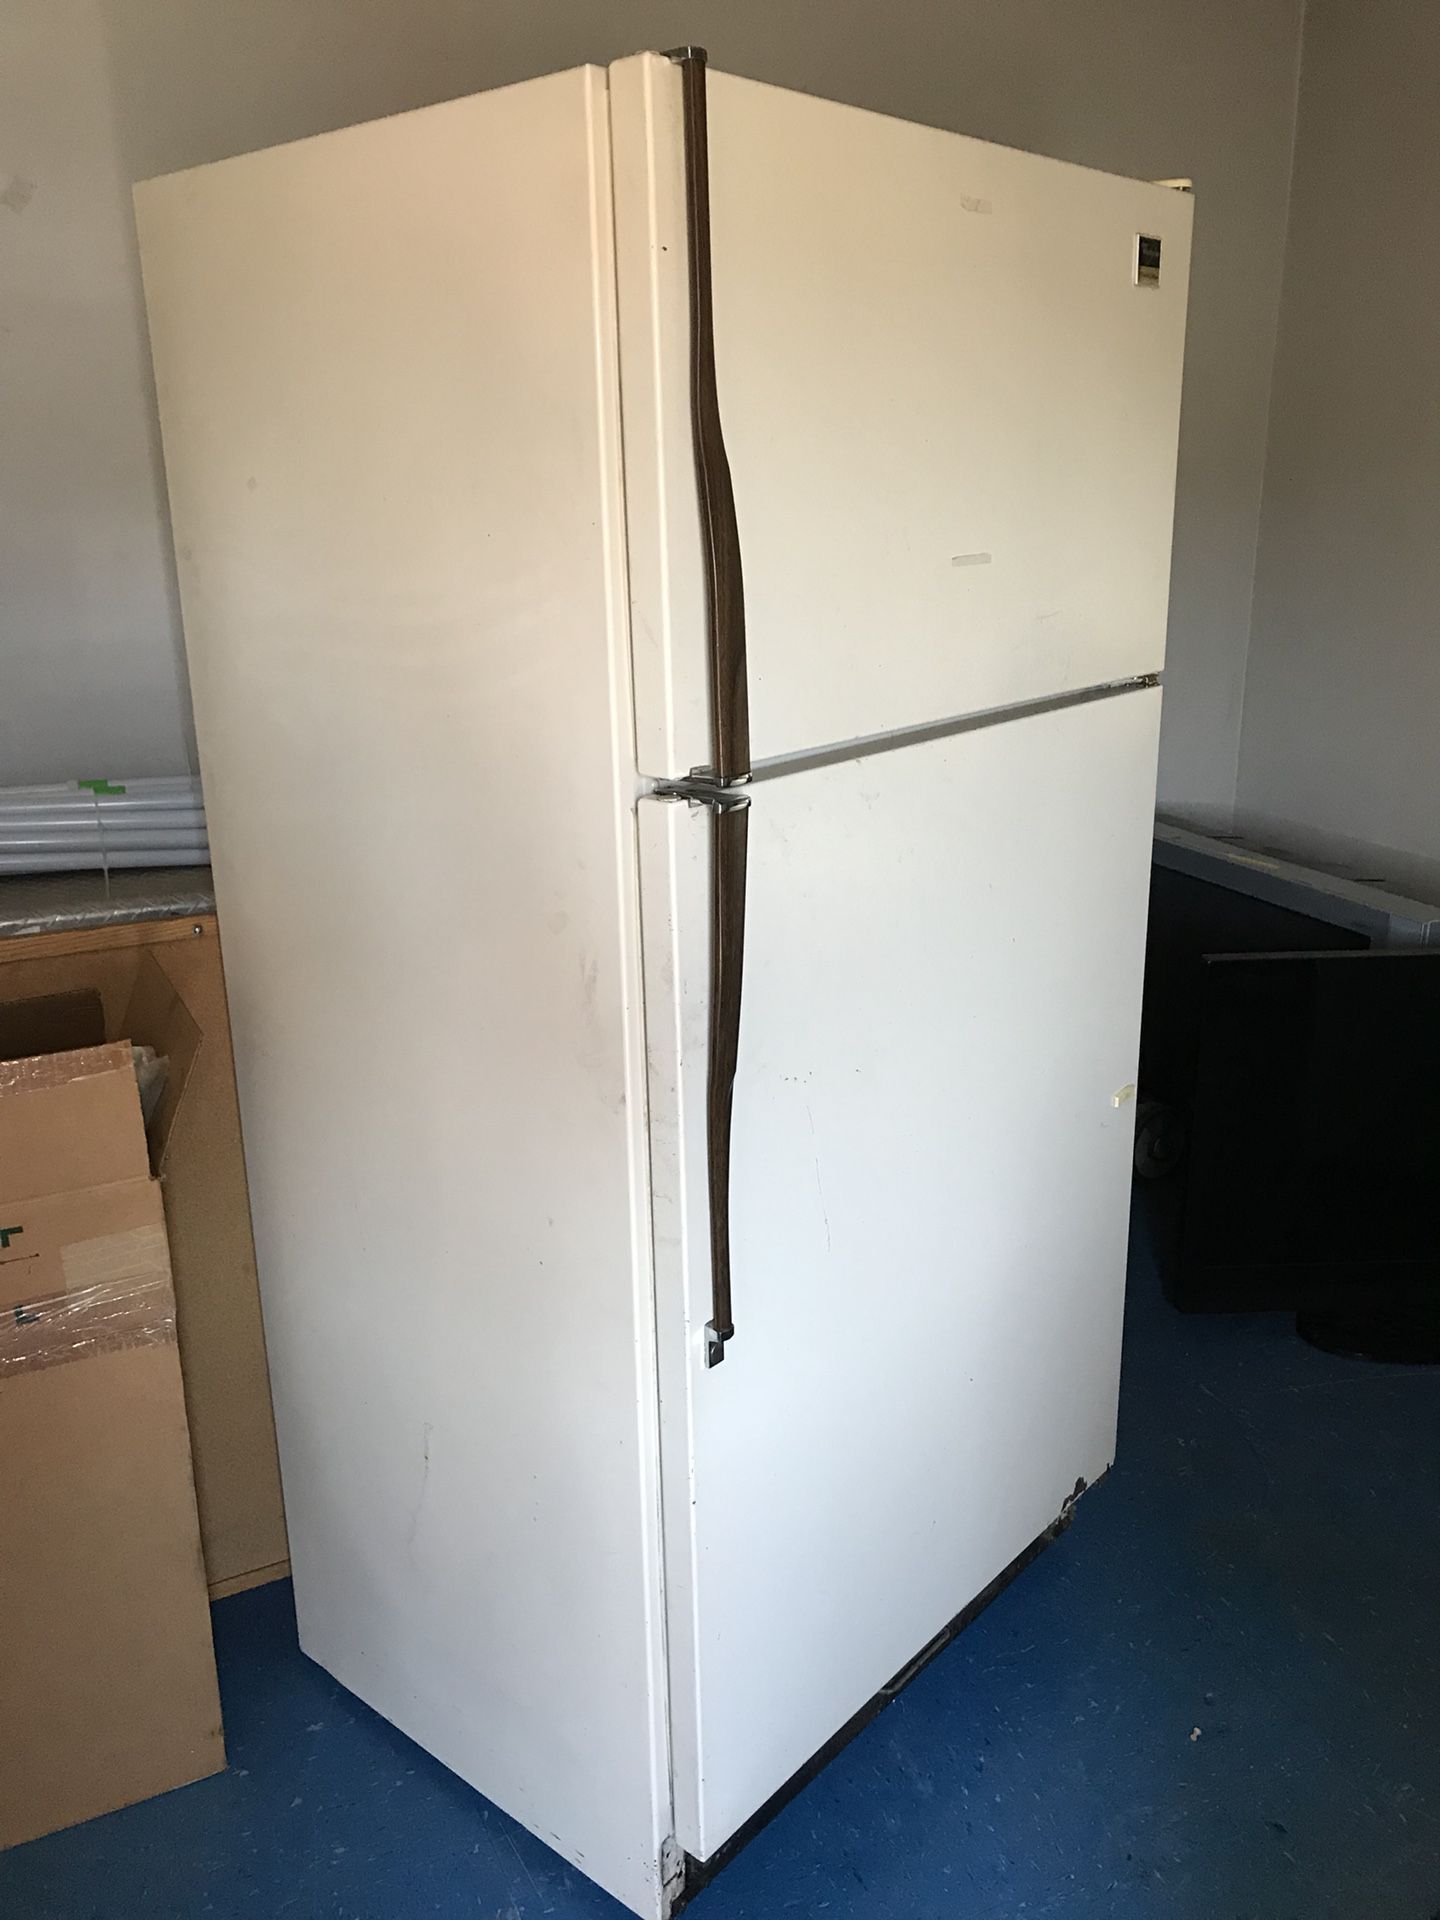 Working refrigerator